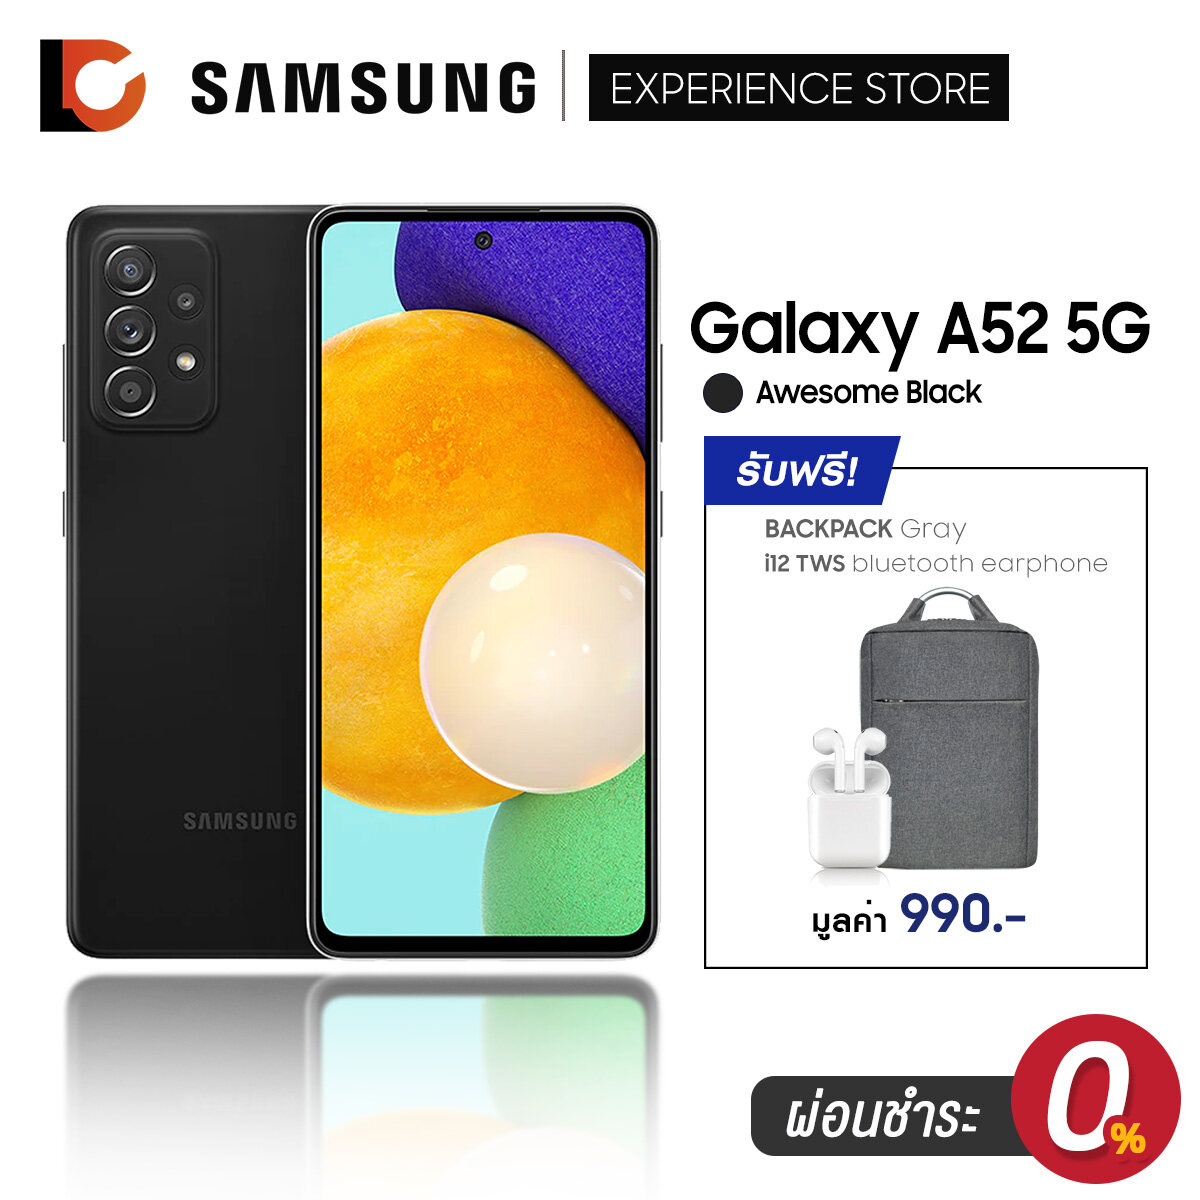 SAMSUNG Galaxy A52 5G (8+128GB) [รับฟรีของสมณาคุณ มูลค่า 990 บาท] เครื่องศูนย์ไทย ประกัน 1 ปี